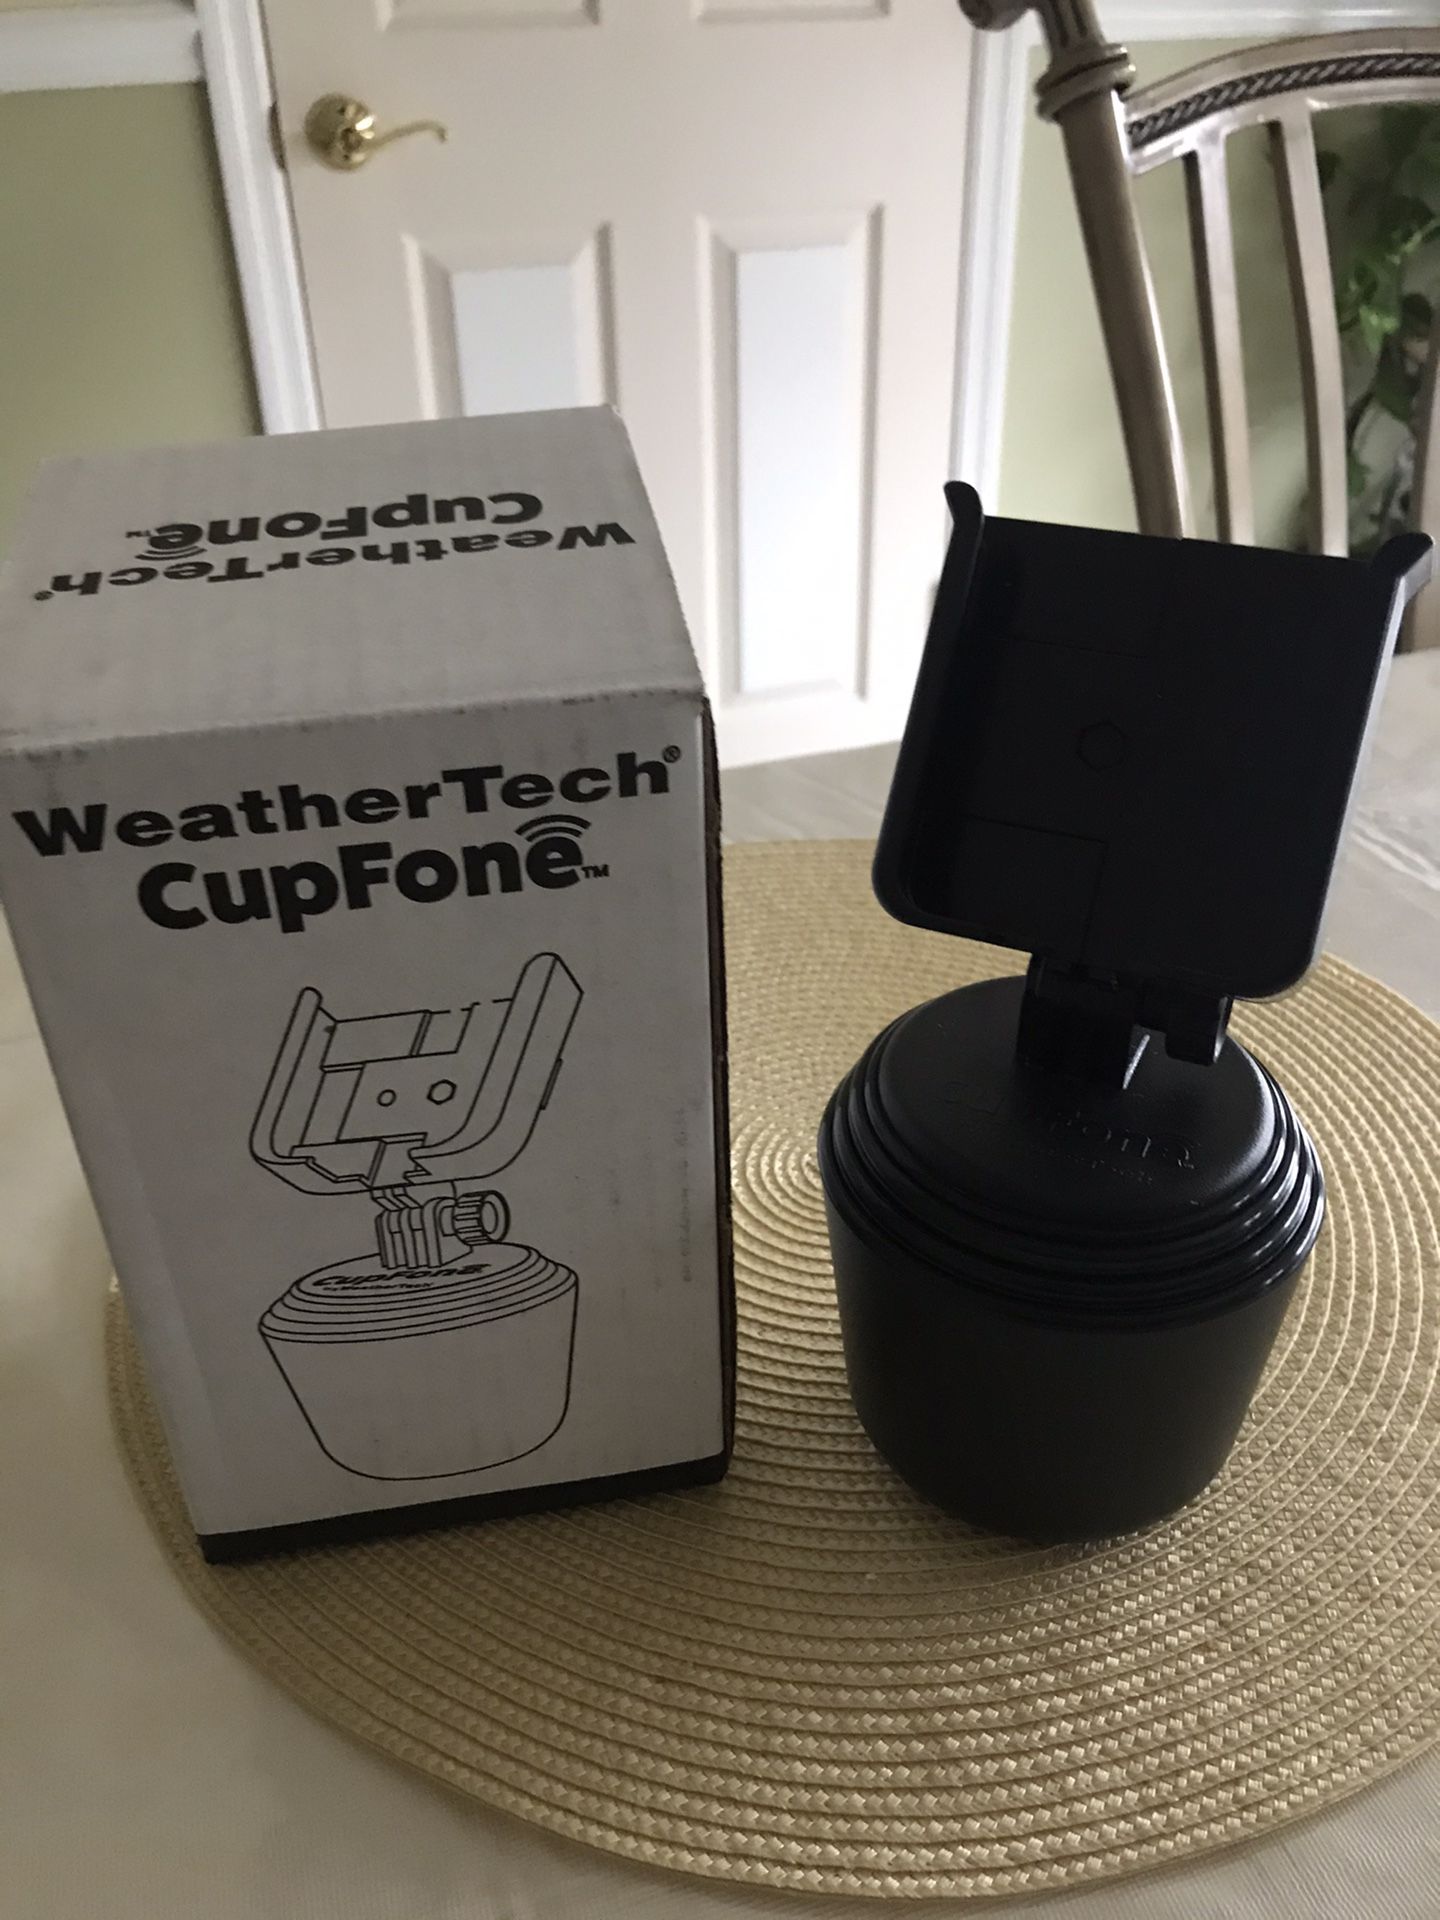 WeatherTech CupFone XL